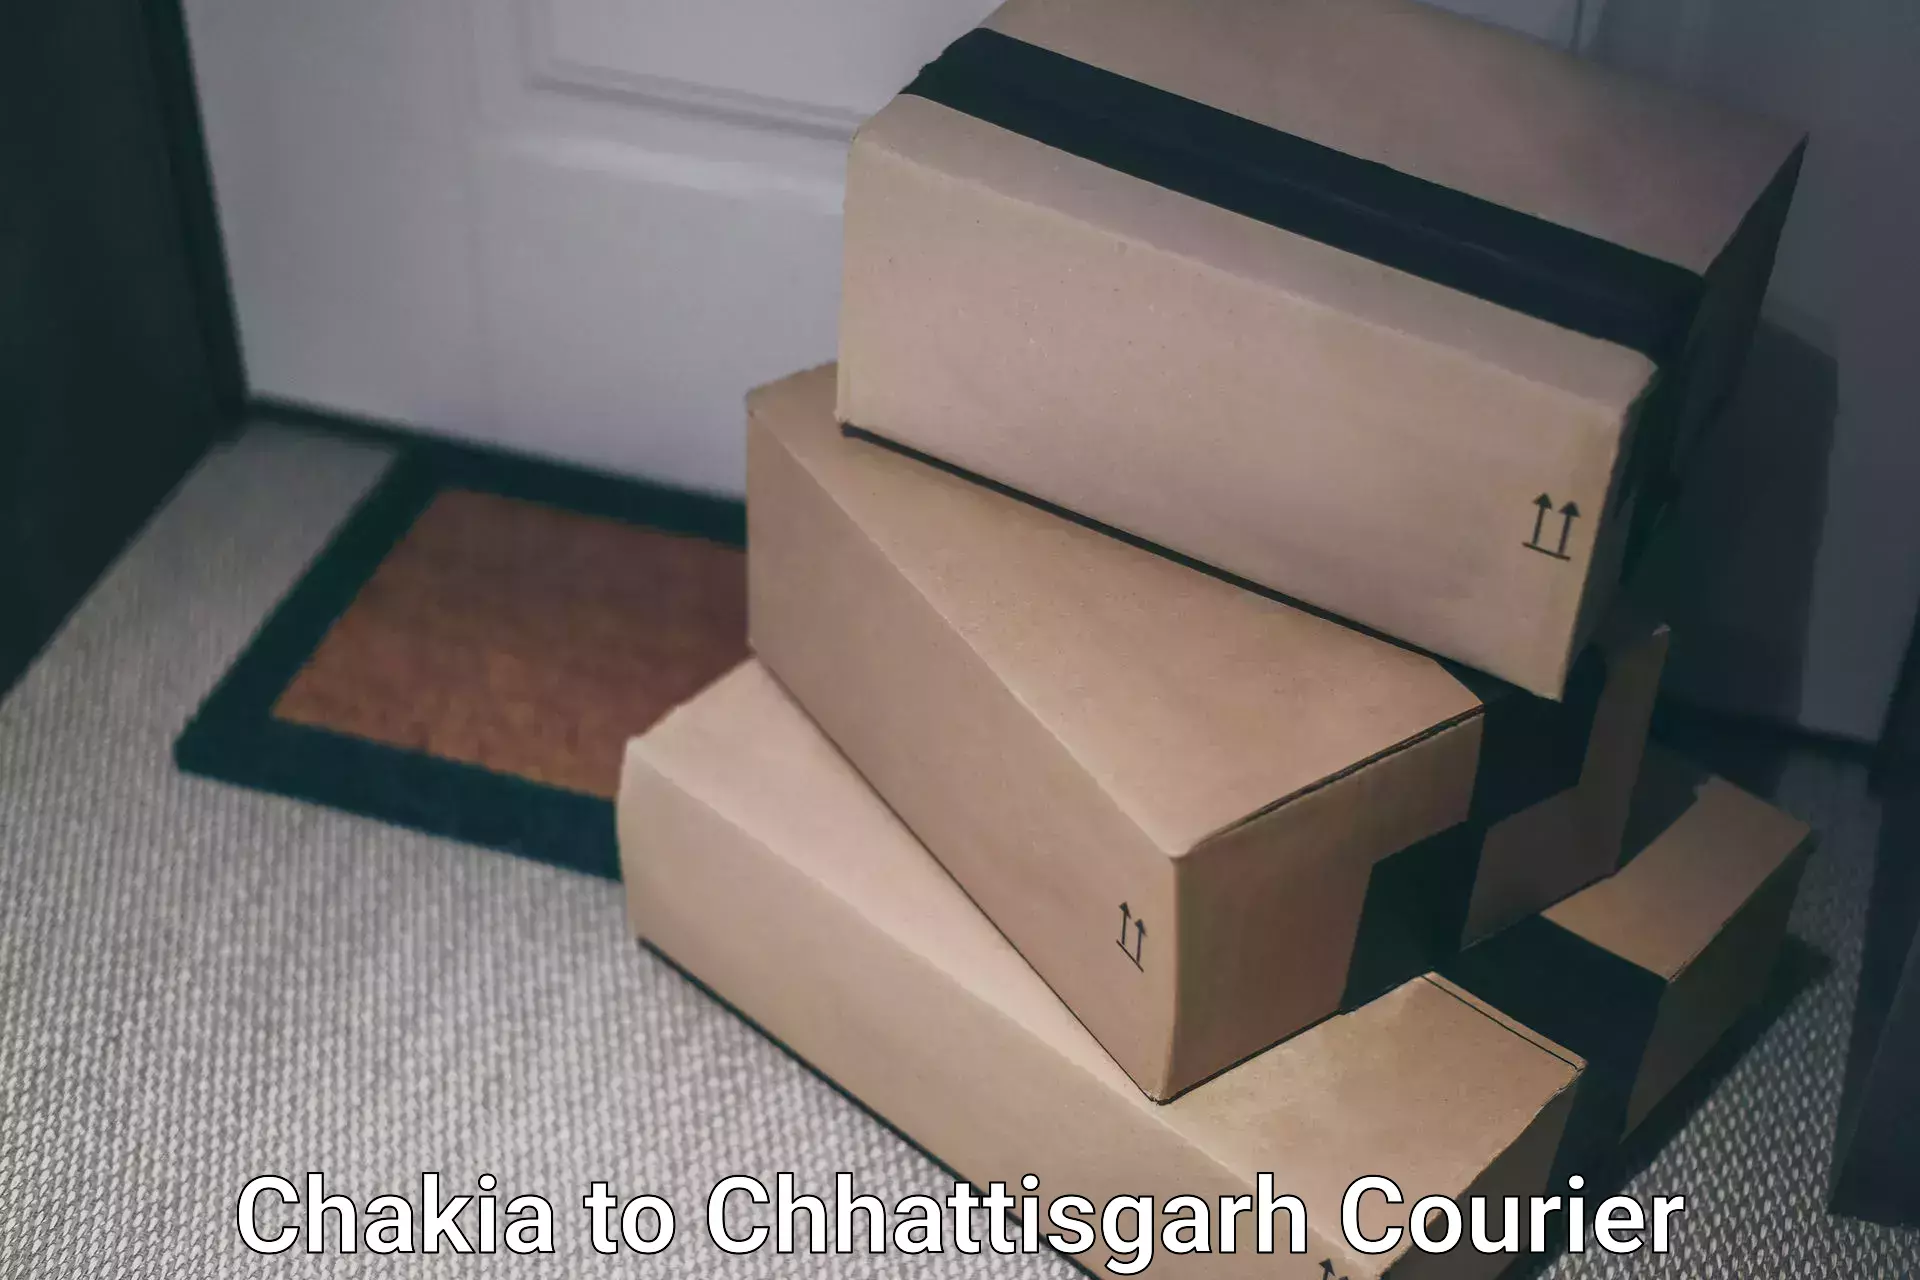 Doorstep delivery service Chakia to Patna Chhattisgarh